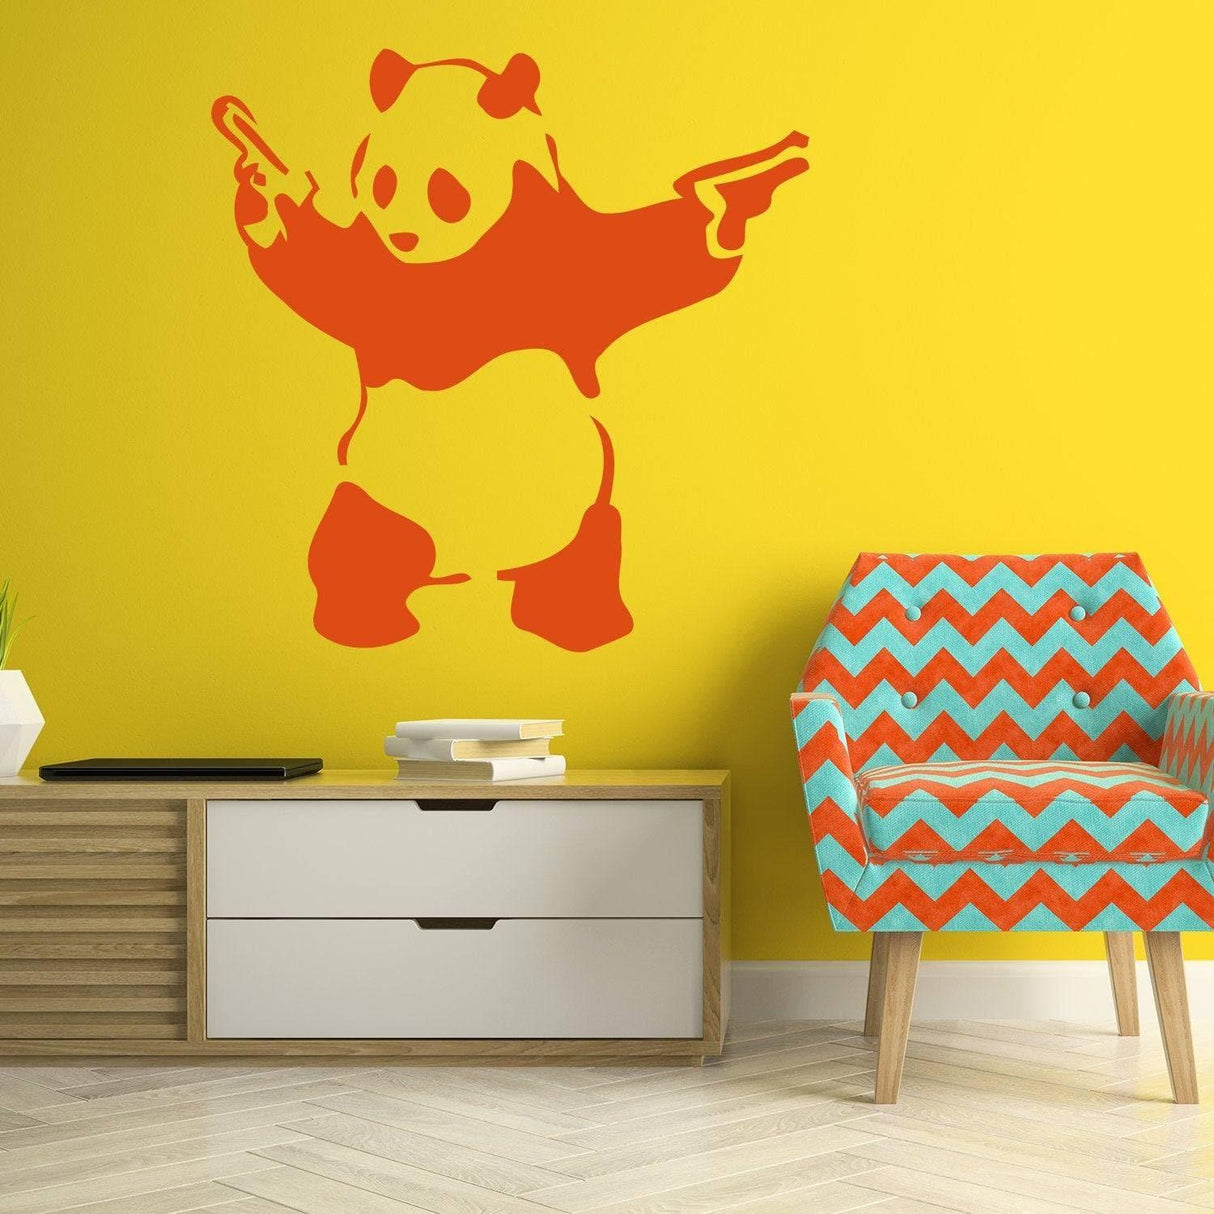 Banksy Panda With Shooting Guns Wall Sticker - Art Graffiti Gun Bear Vinyl Decal - Street Bears Pistols Armed Pistol Pandas Stickers Decals - Decords